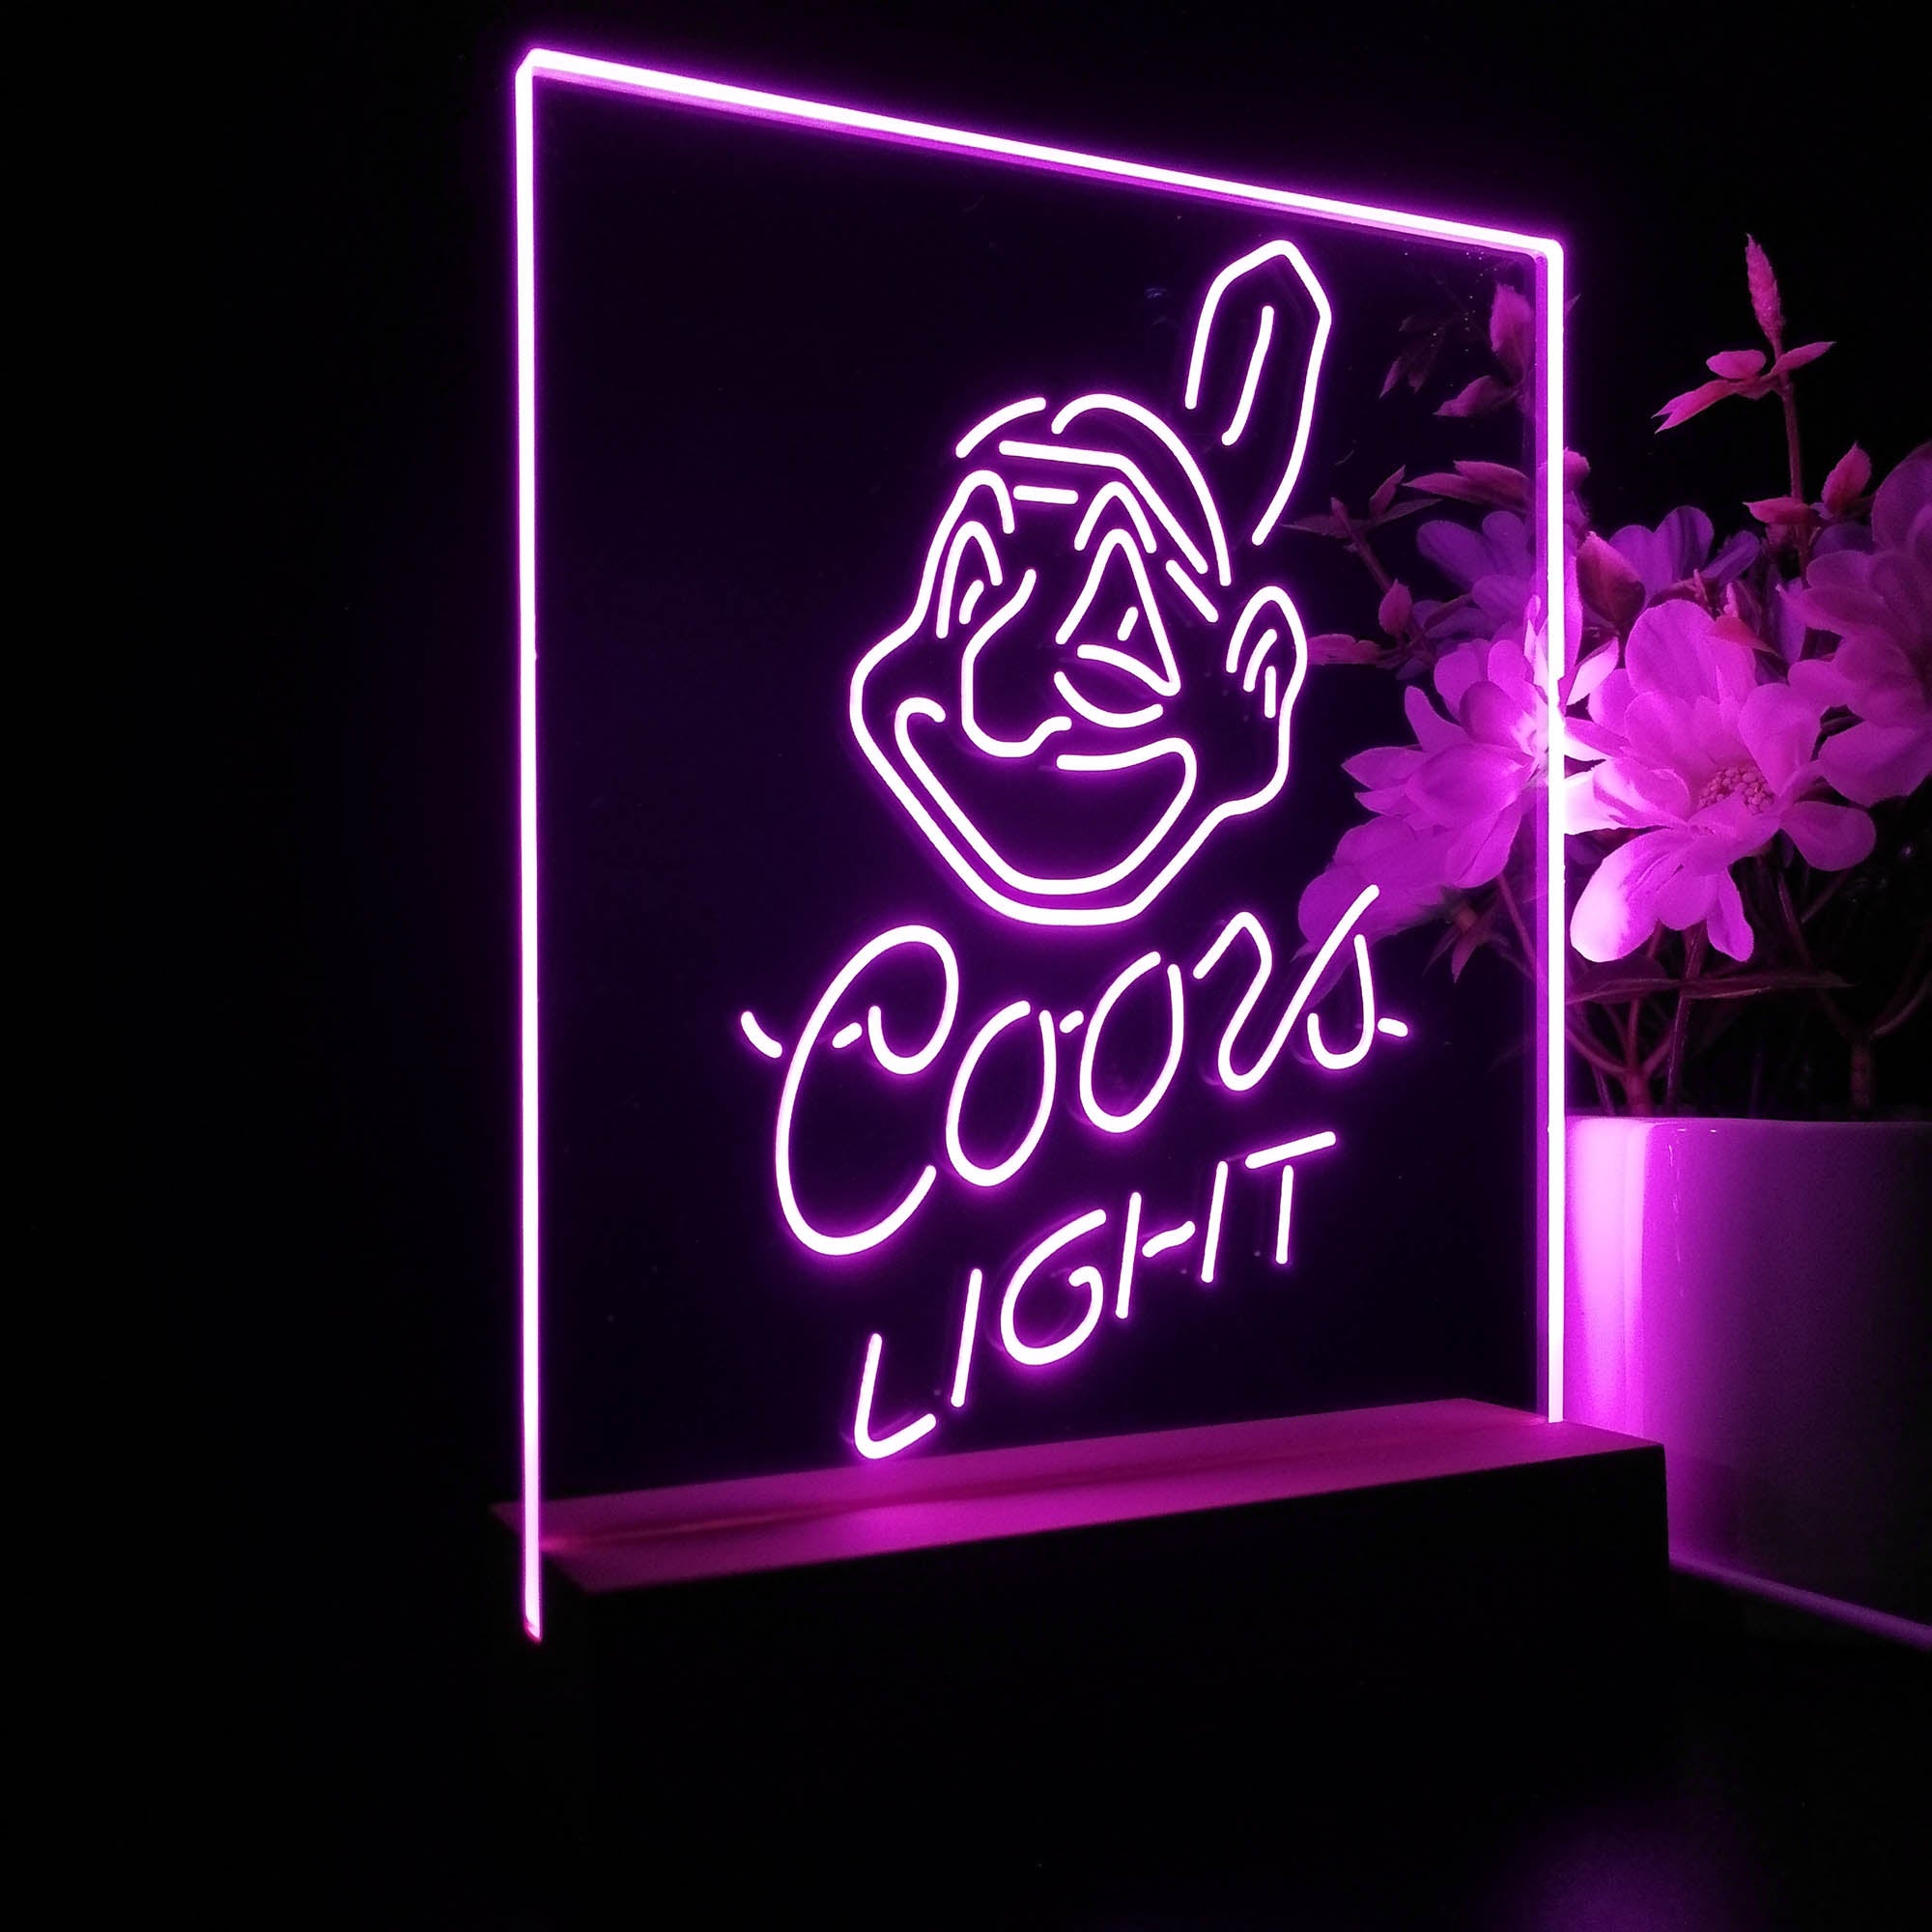 Cleveland Indians Coors Light 3D LED Optical Illusion Sport Team Night Light